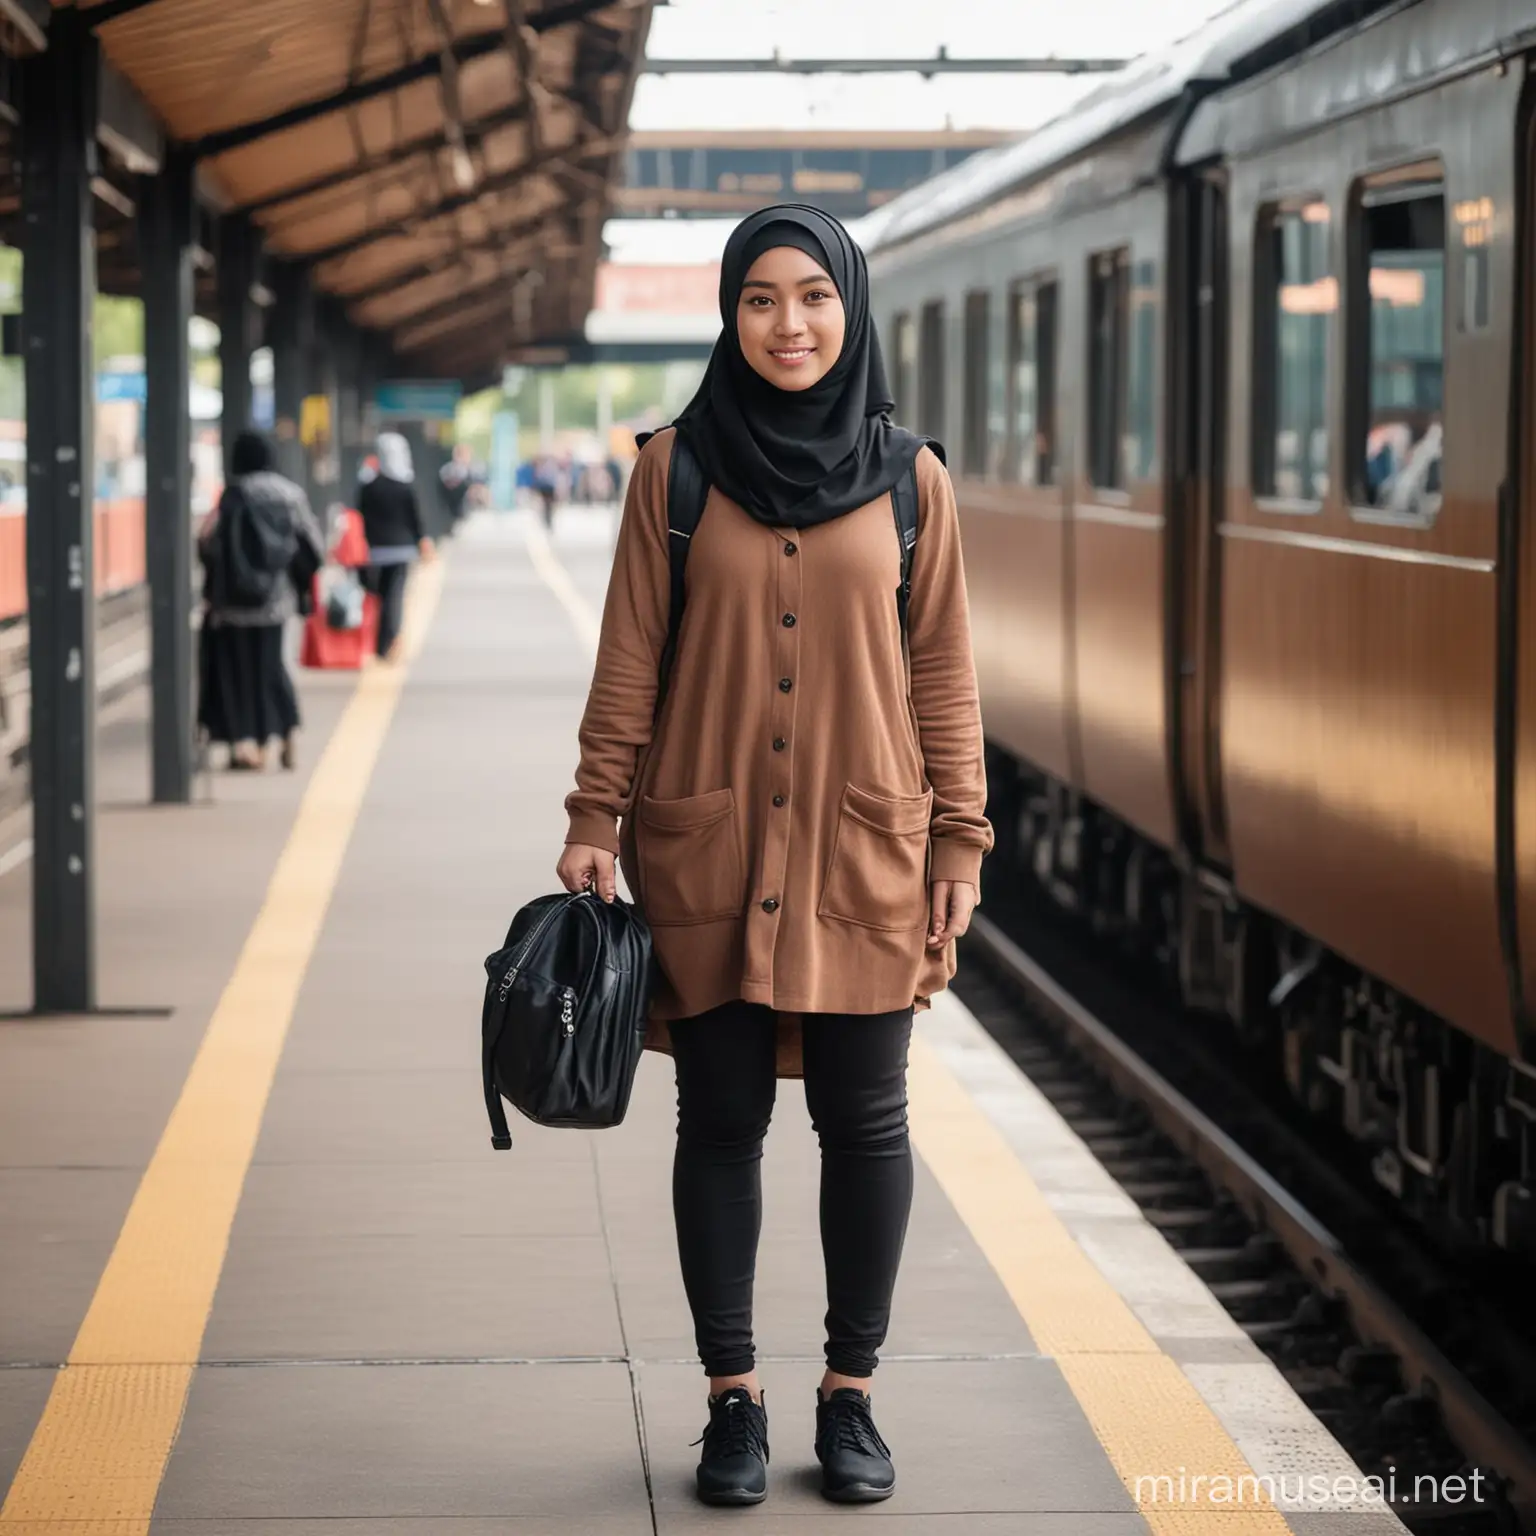 Indonesian Woman in Hijab Waiting at Train Station